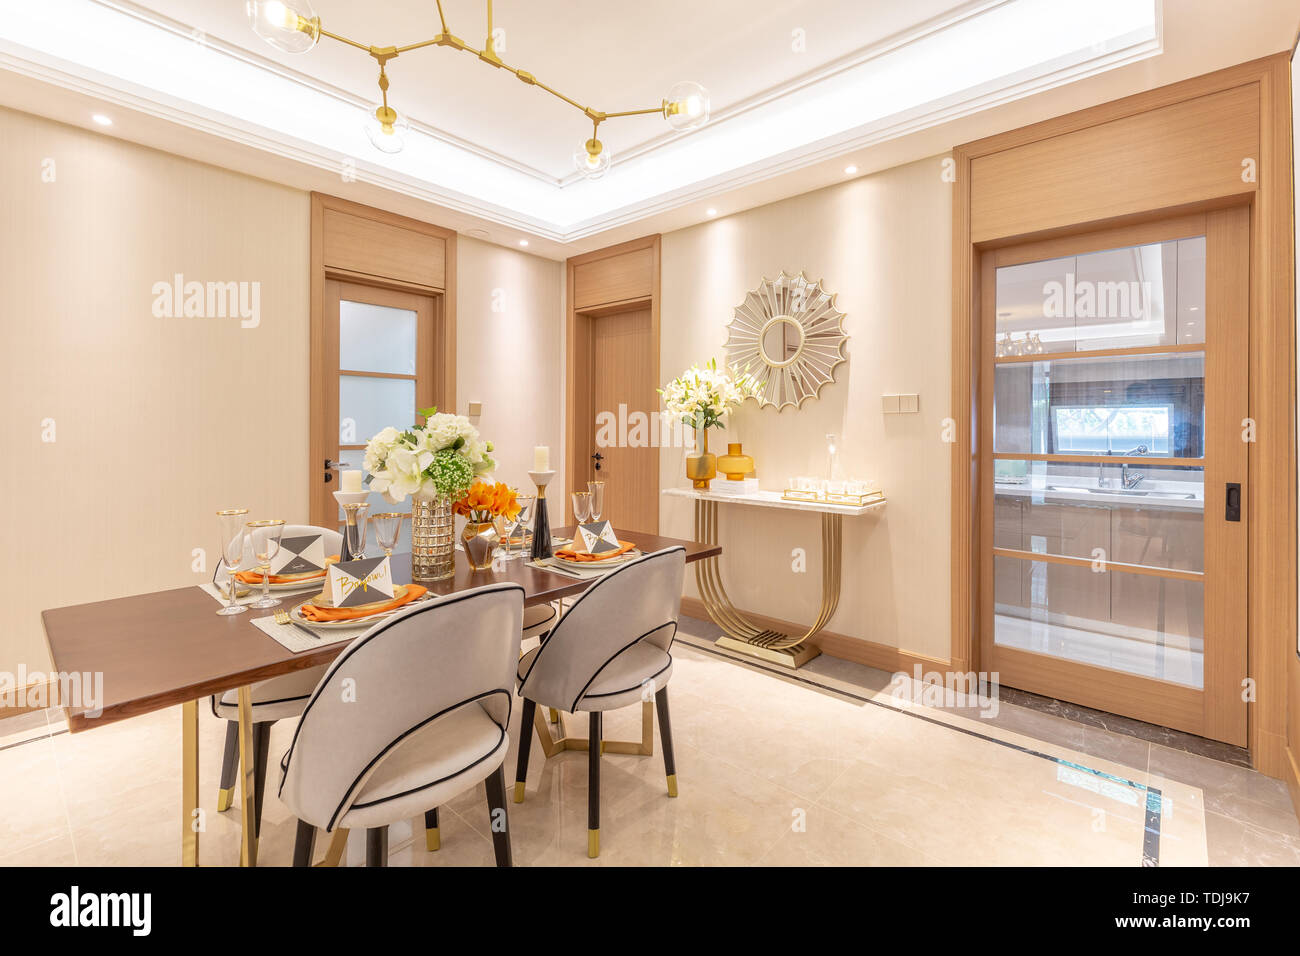 Design of Internal Space of Model Room of Modern Home Restaurant Stock Photo